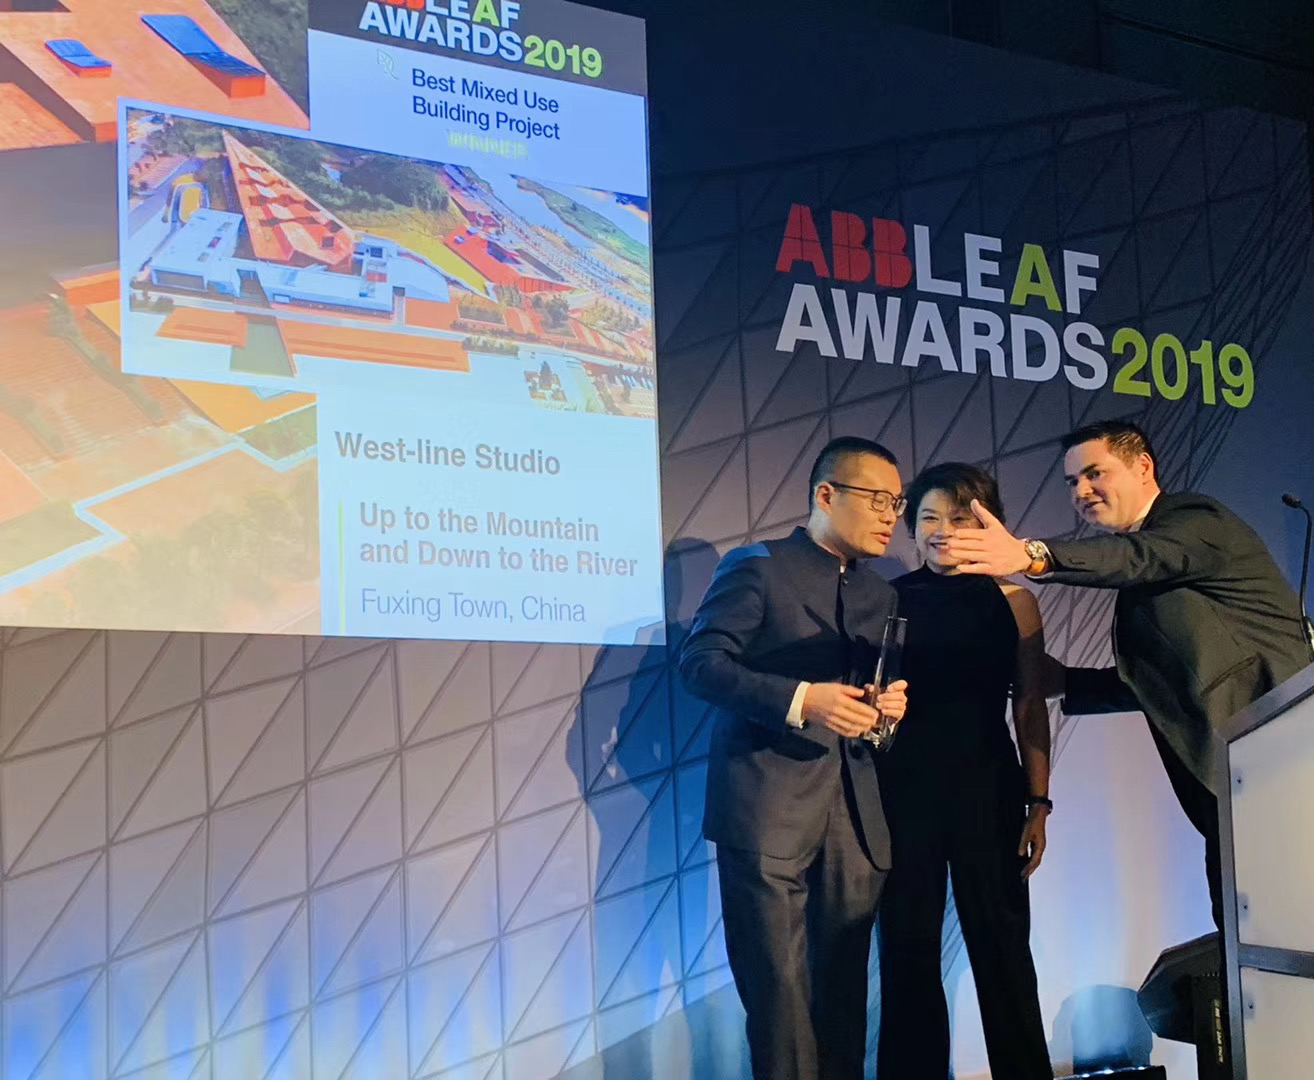 West-line Studio won Leaf Awards 2019 Best Mixed Use Building Project Winner